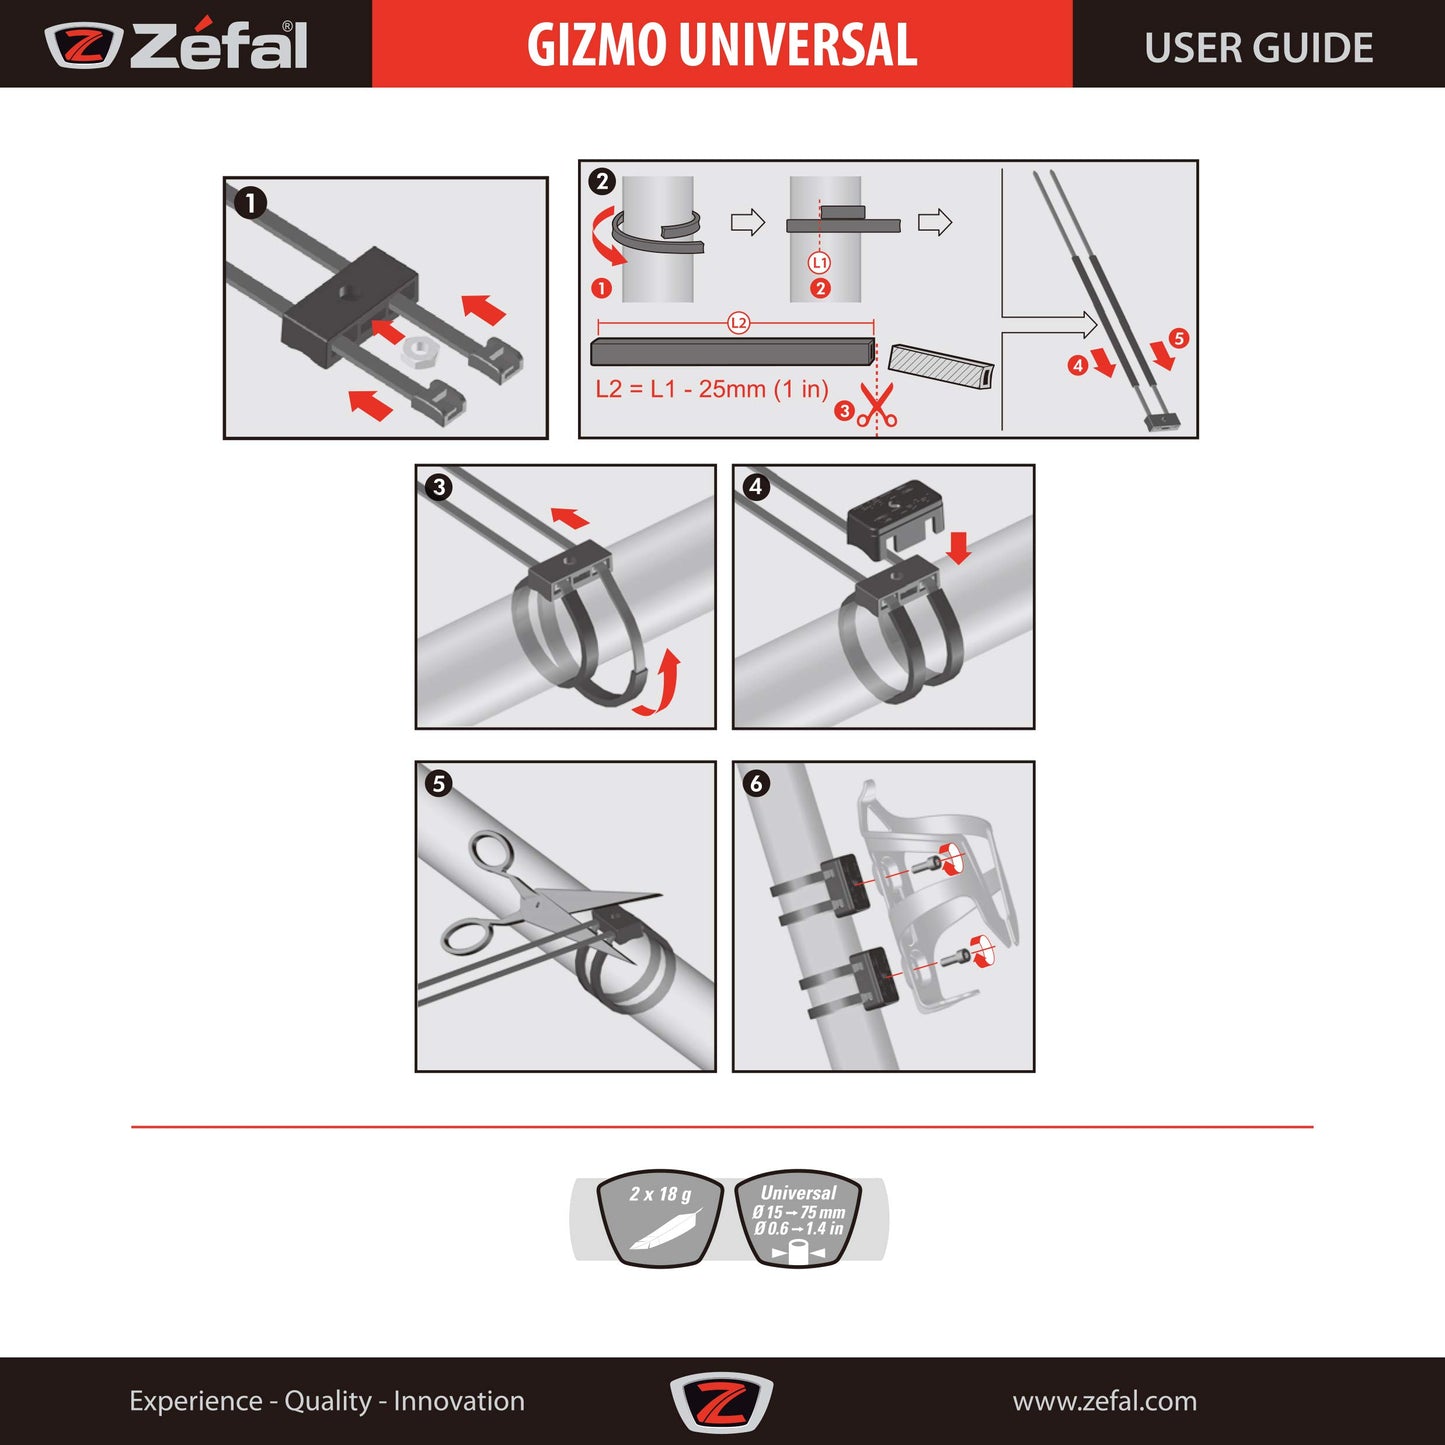 ZEFAL Gizmo Universal Mount Kit user guide